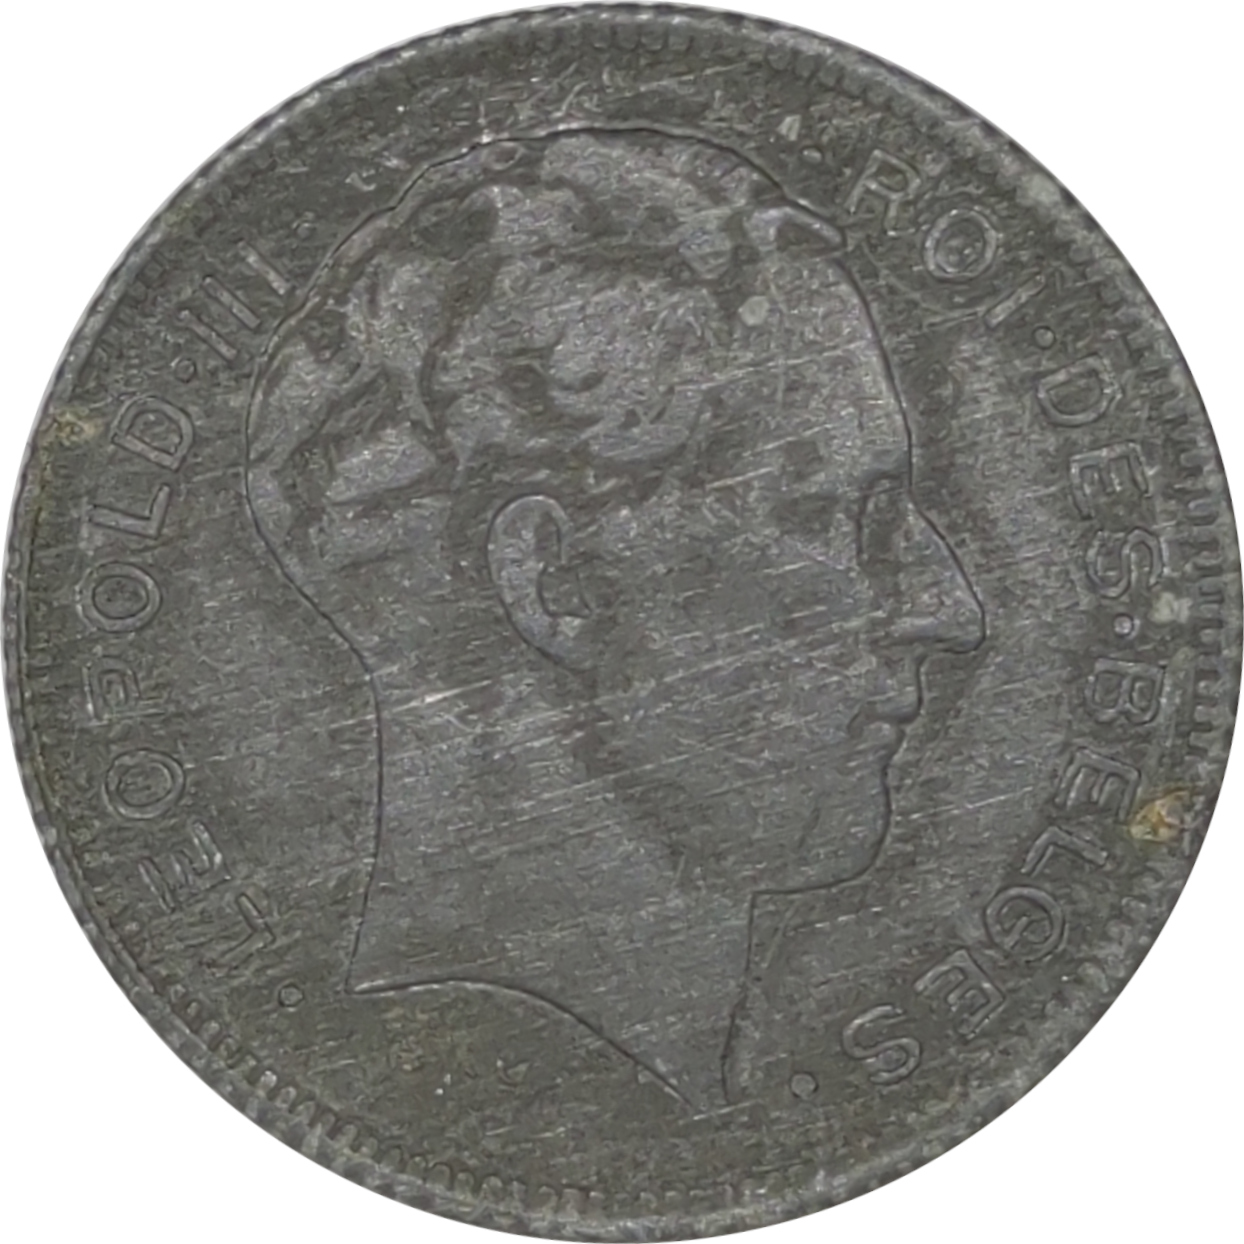 5 francs - Léopold III - Rau